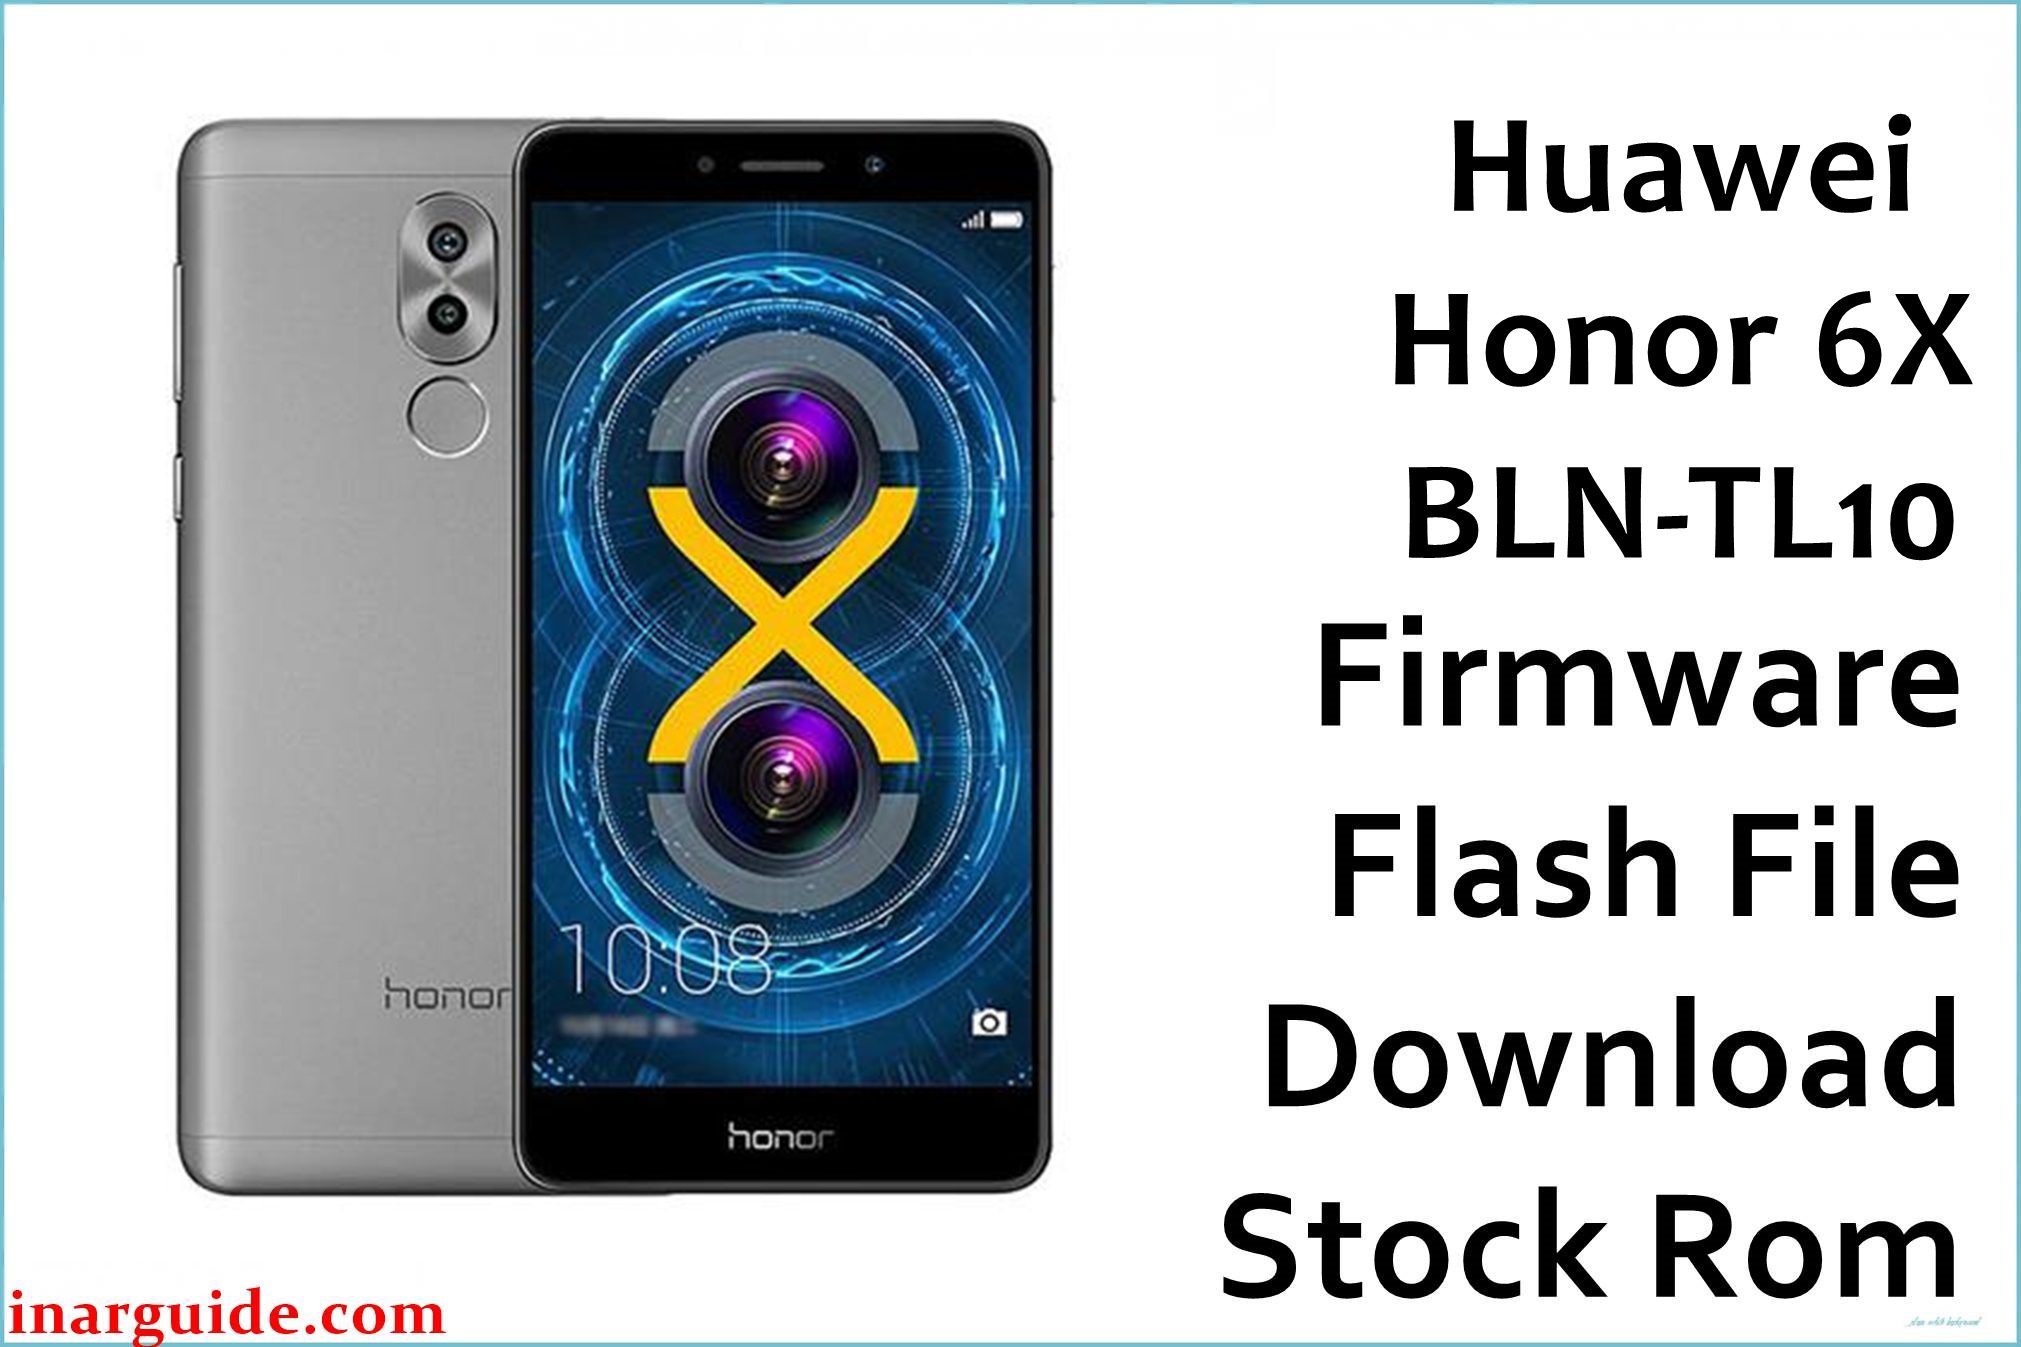 Huawei Honor 6X BLN TL10